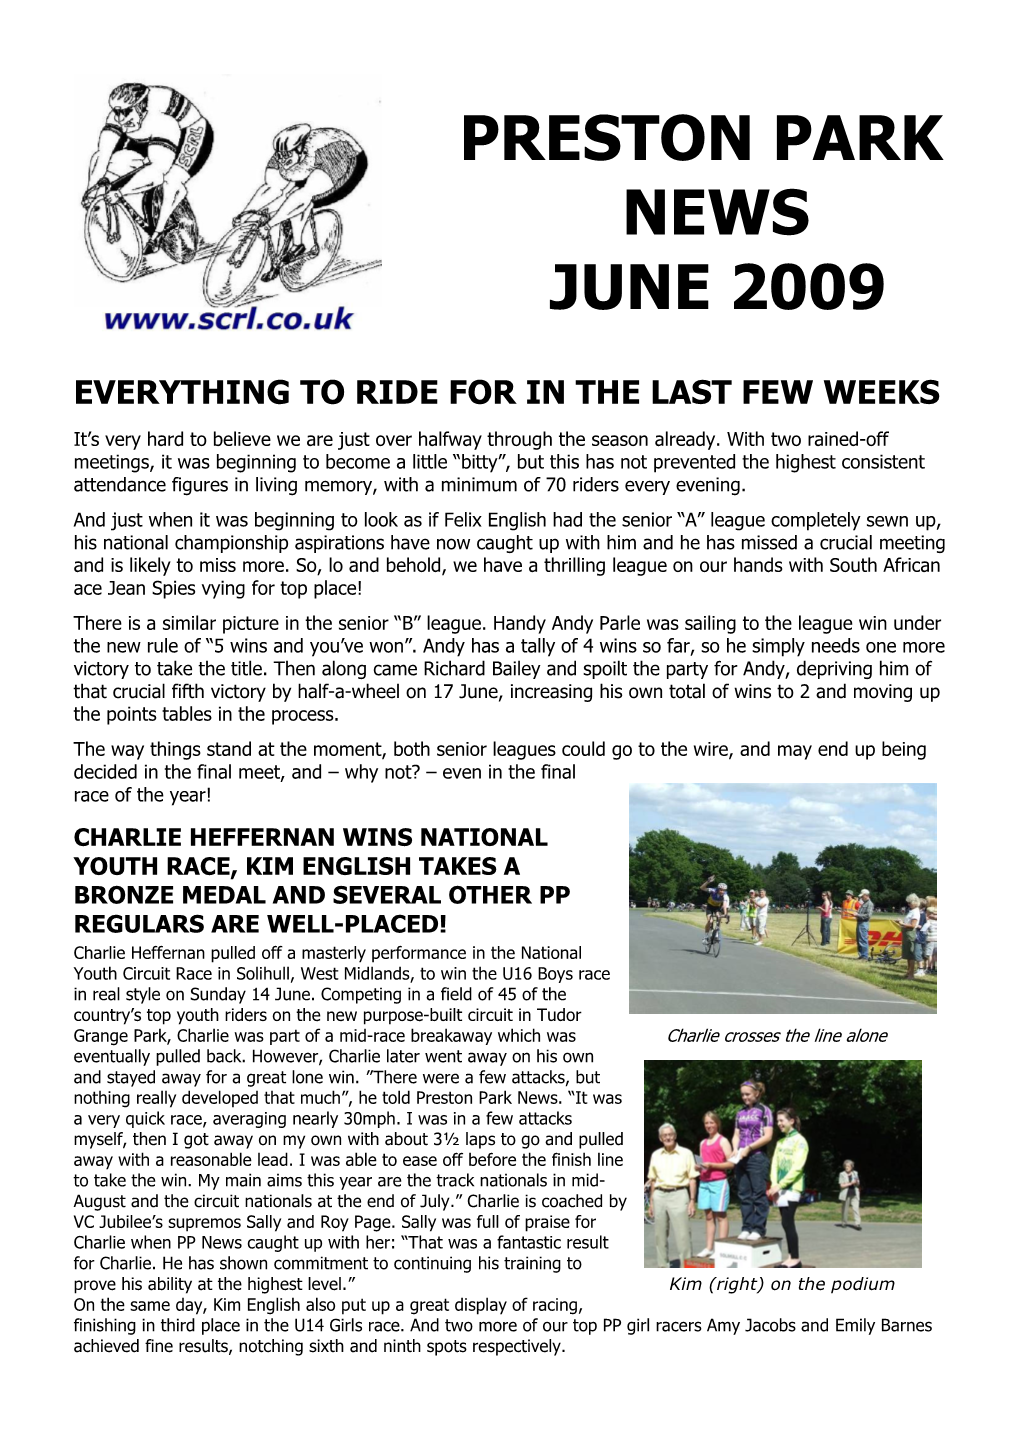 Preston Park News June 2009